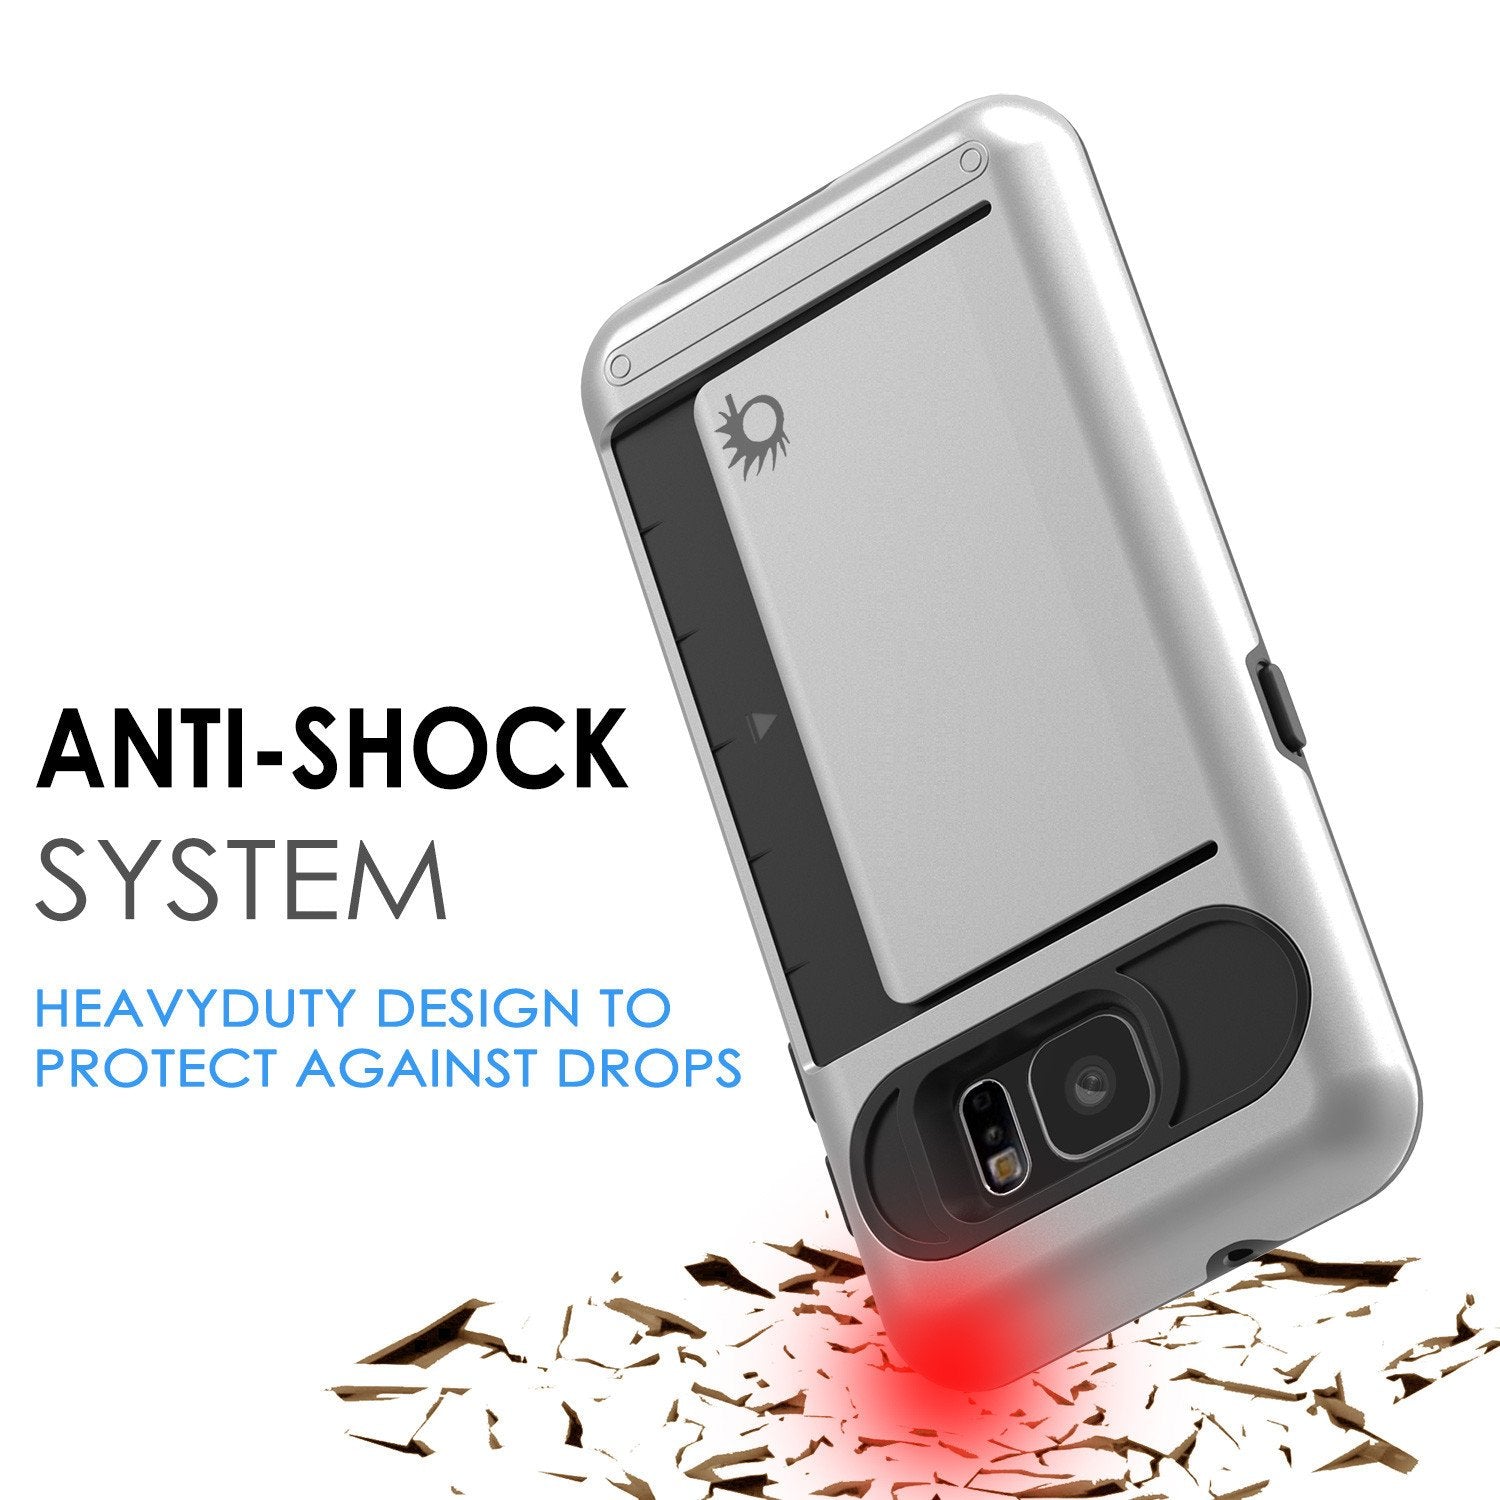 Galaxy S7 EDGE Case PunkCase CLUTCH Silver Series Slim Armor Soft Cover Case w/ Screen Protector